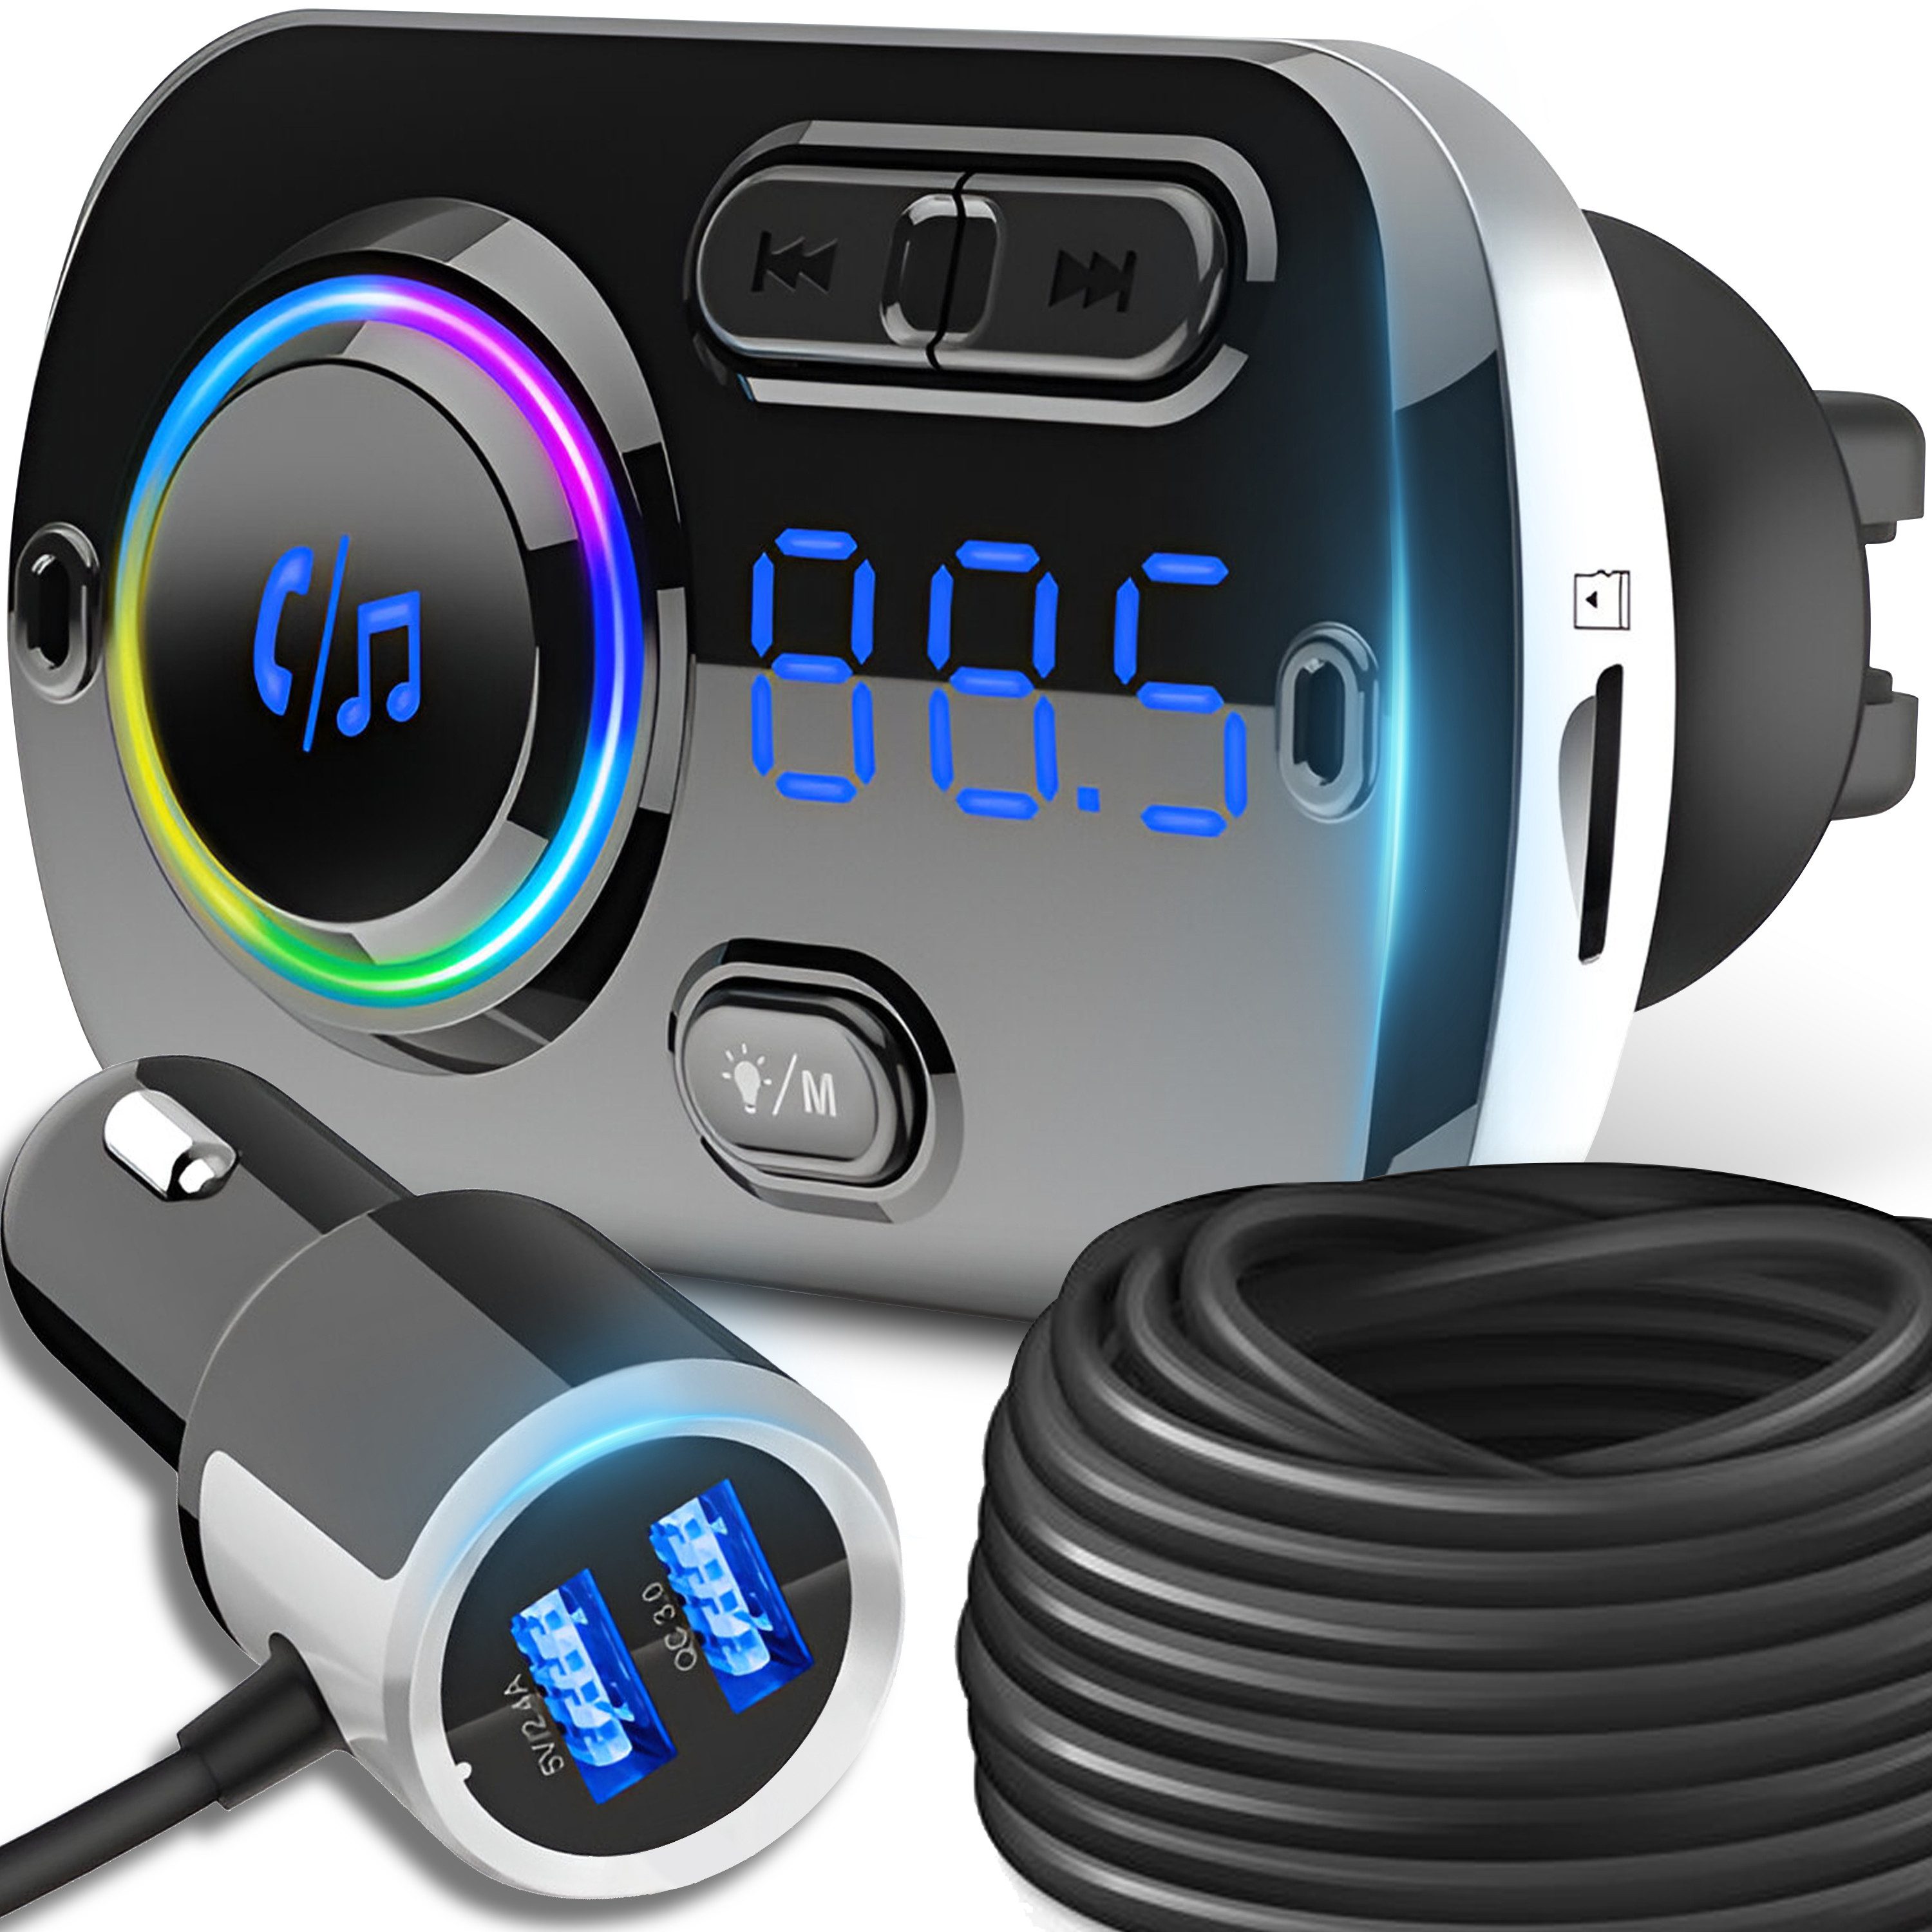 Retoo FM Transmitter Auto Radio Bluetooth 5.0 Adapter Dual USB Ladegerät KFZ-Transmitter, 110 cm, Breiter Frequenzbereich, Zwei USB-Anschlüsse, RGB-Beleuchtung